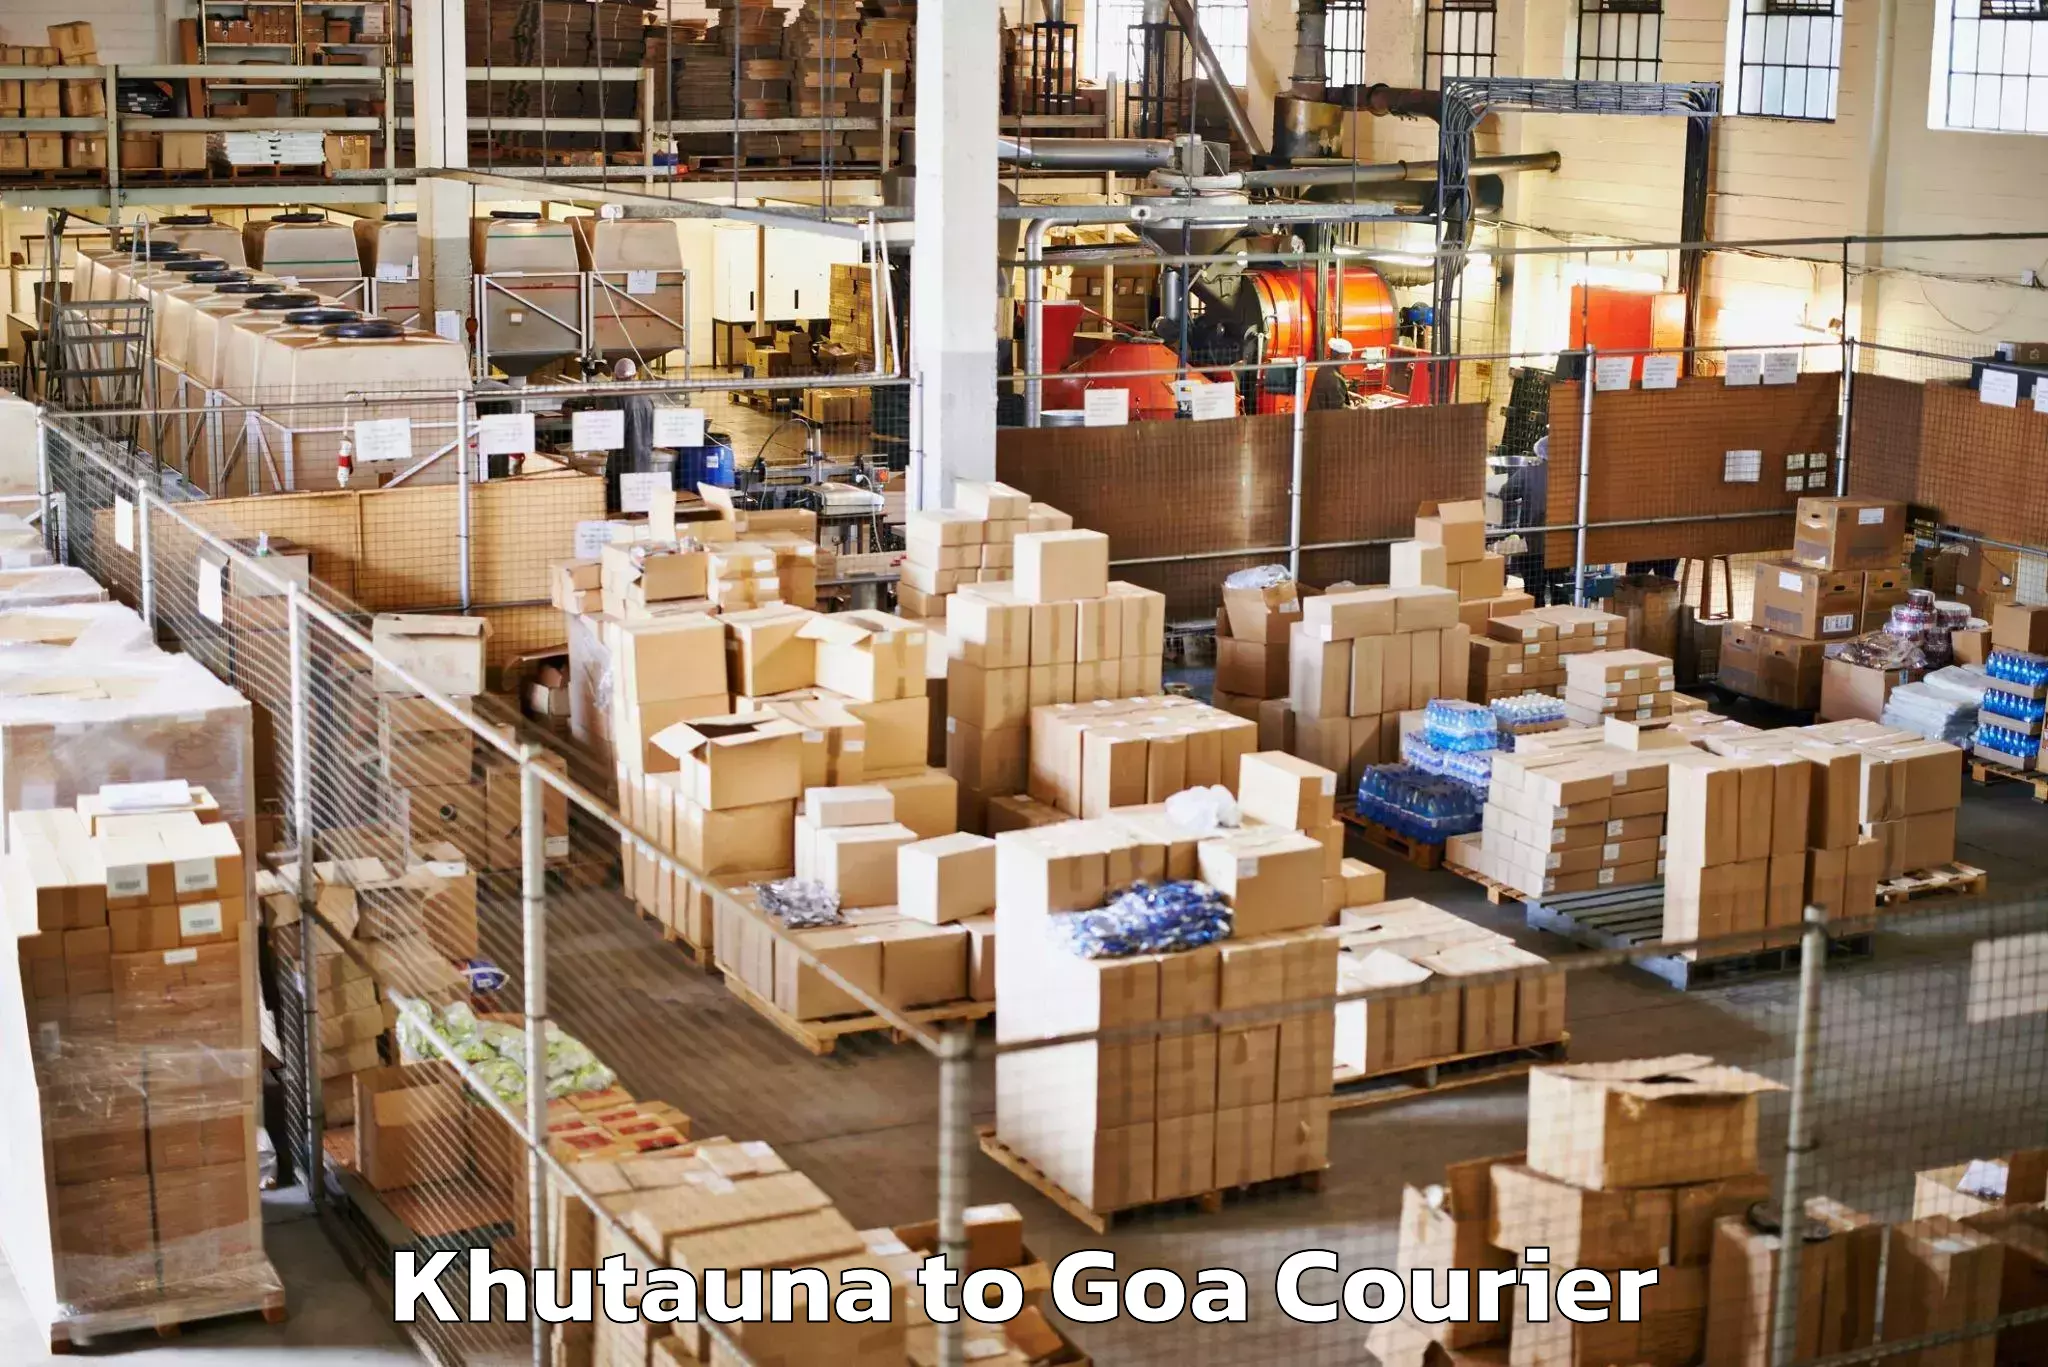 Luggage shipment specialists Khutauna to Goa